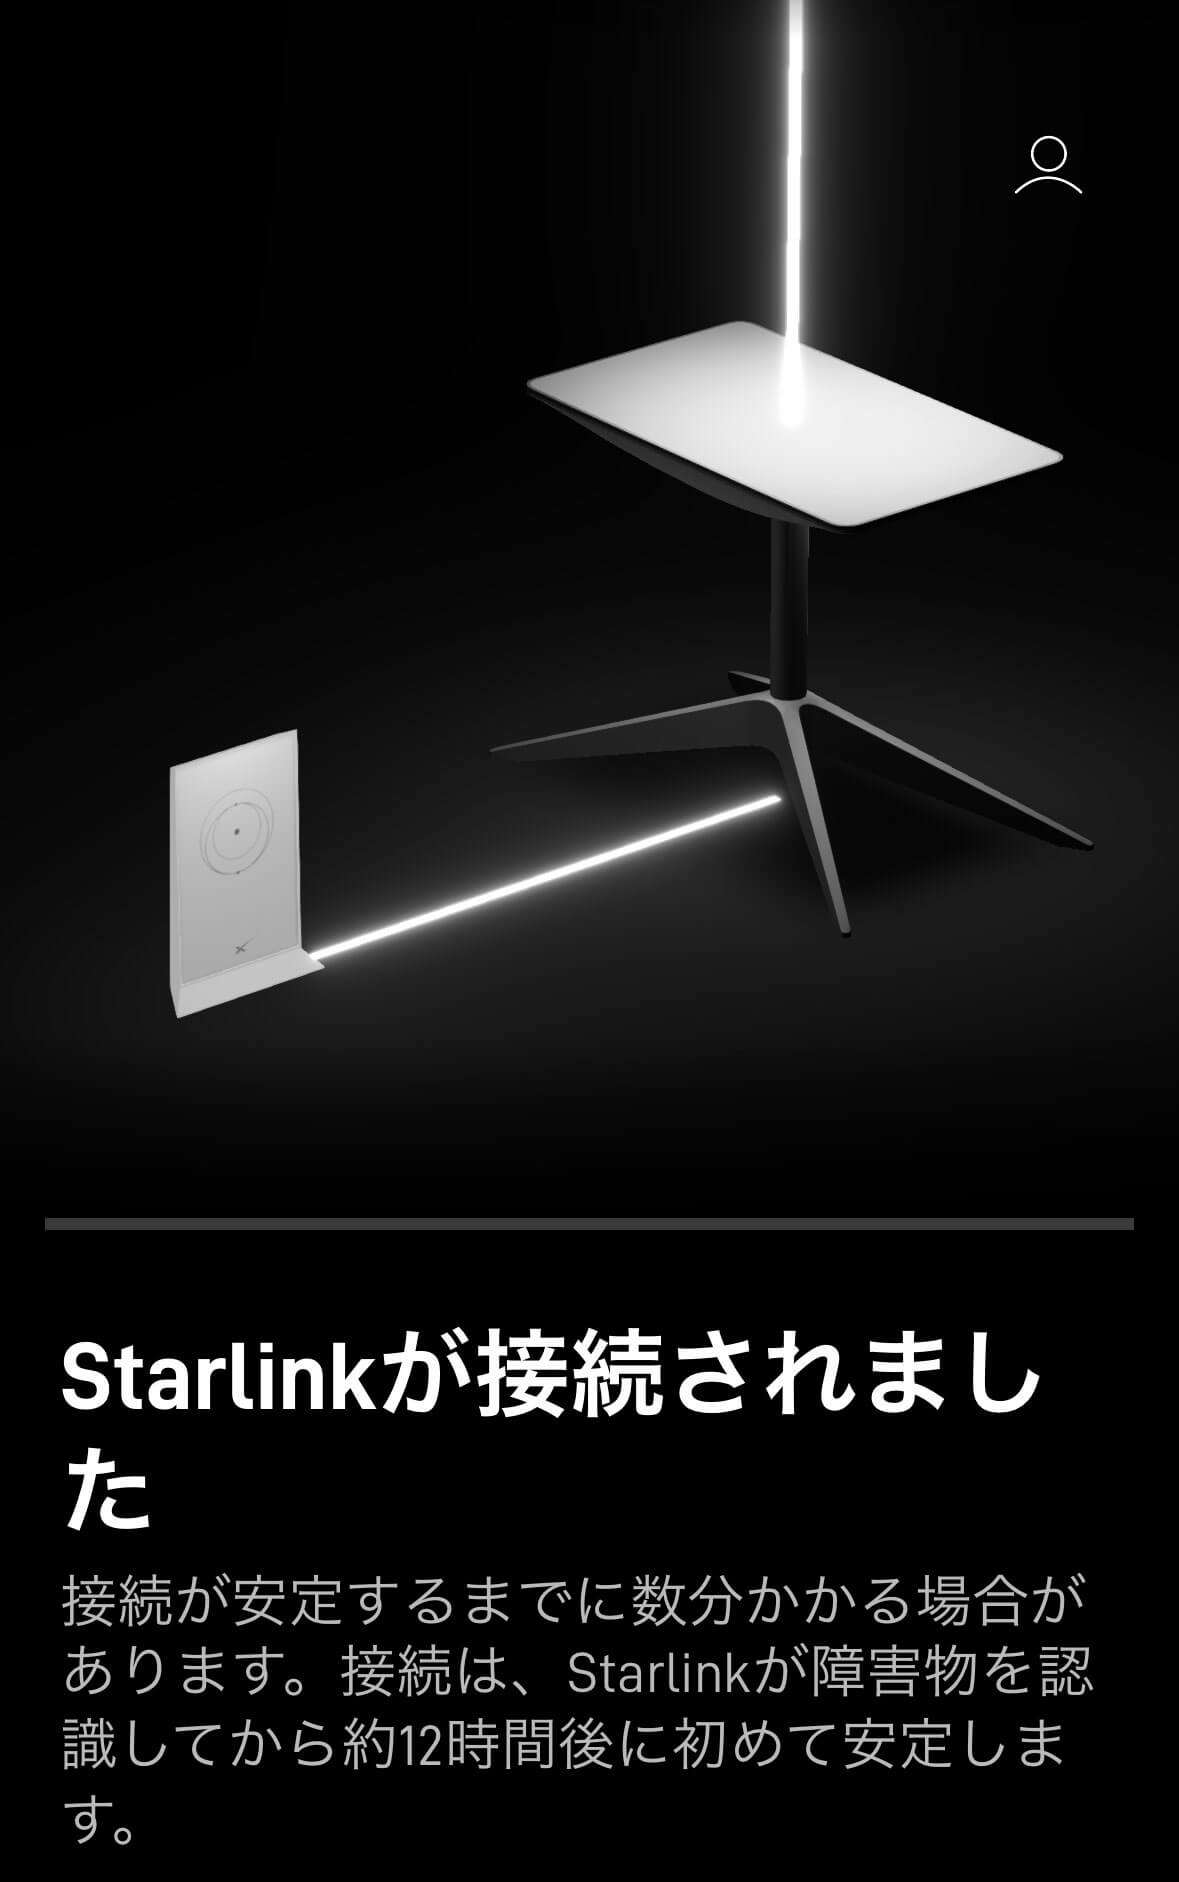 Starlinkのスマホアプリ